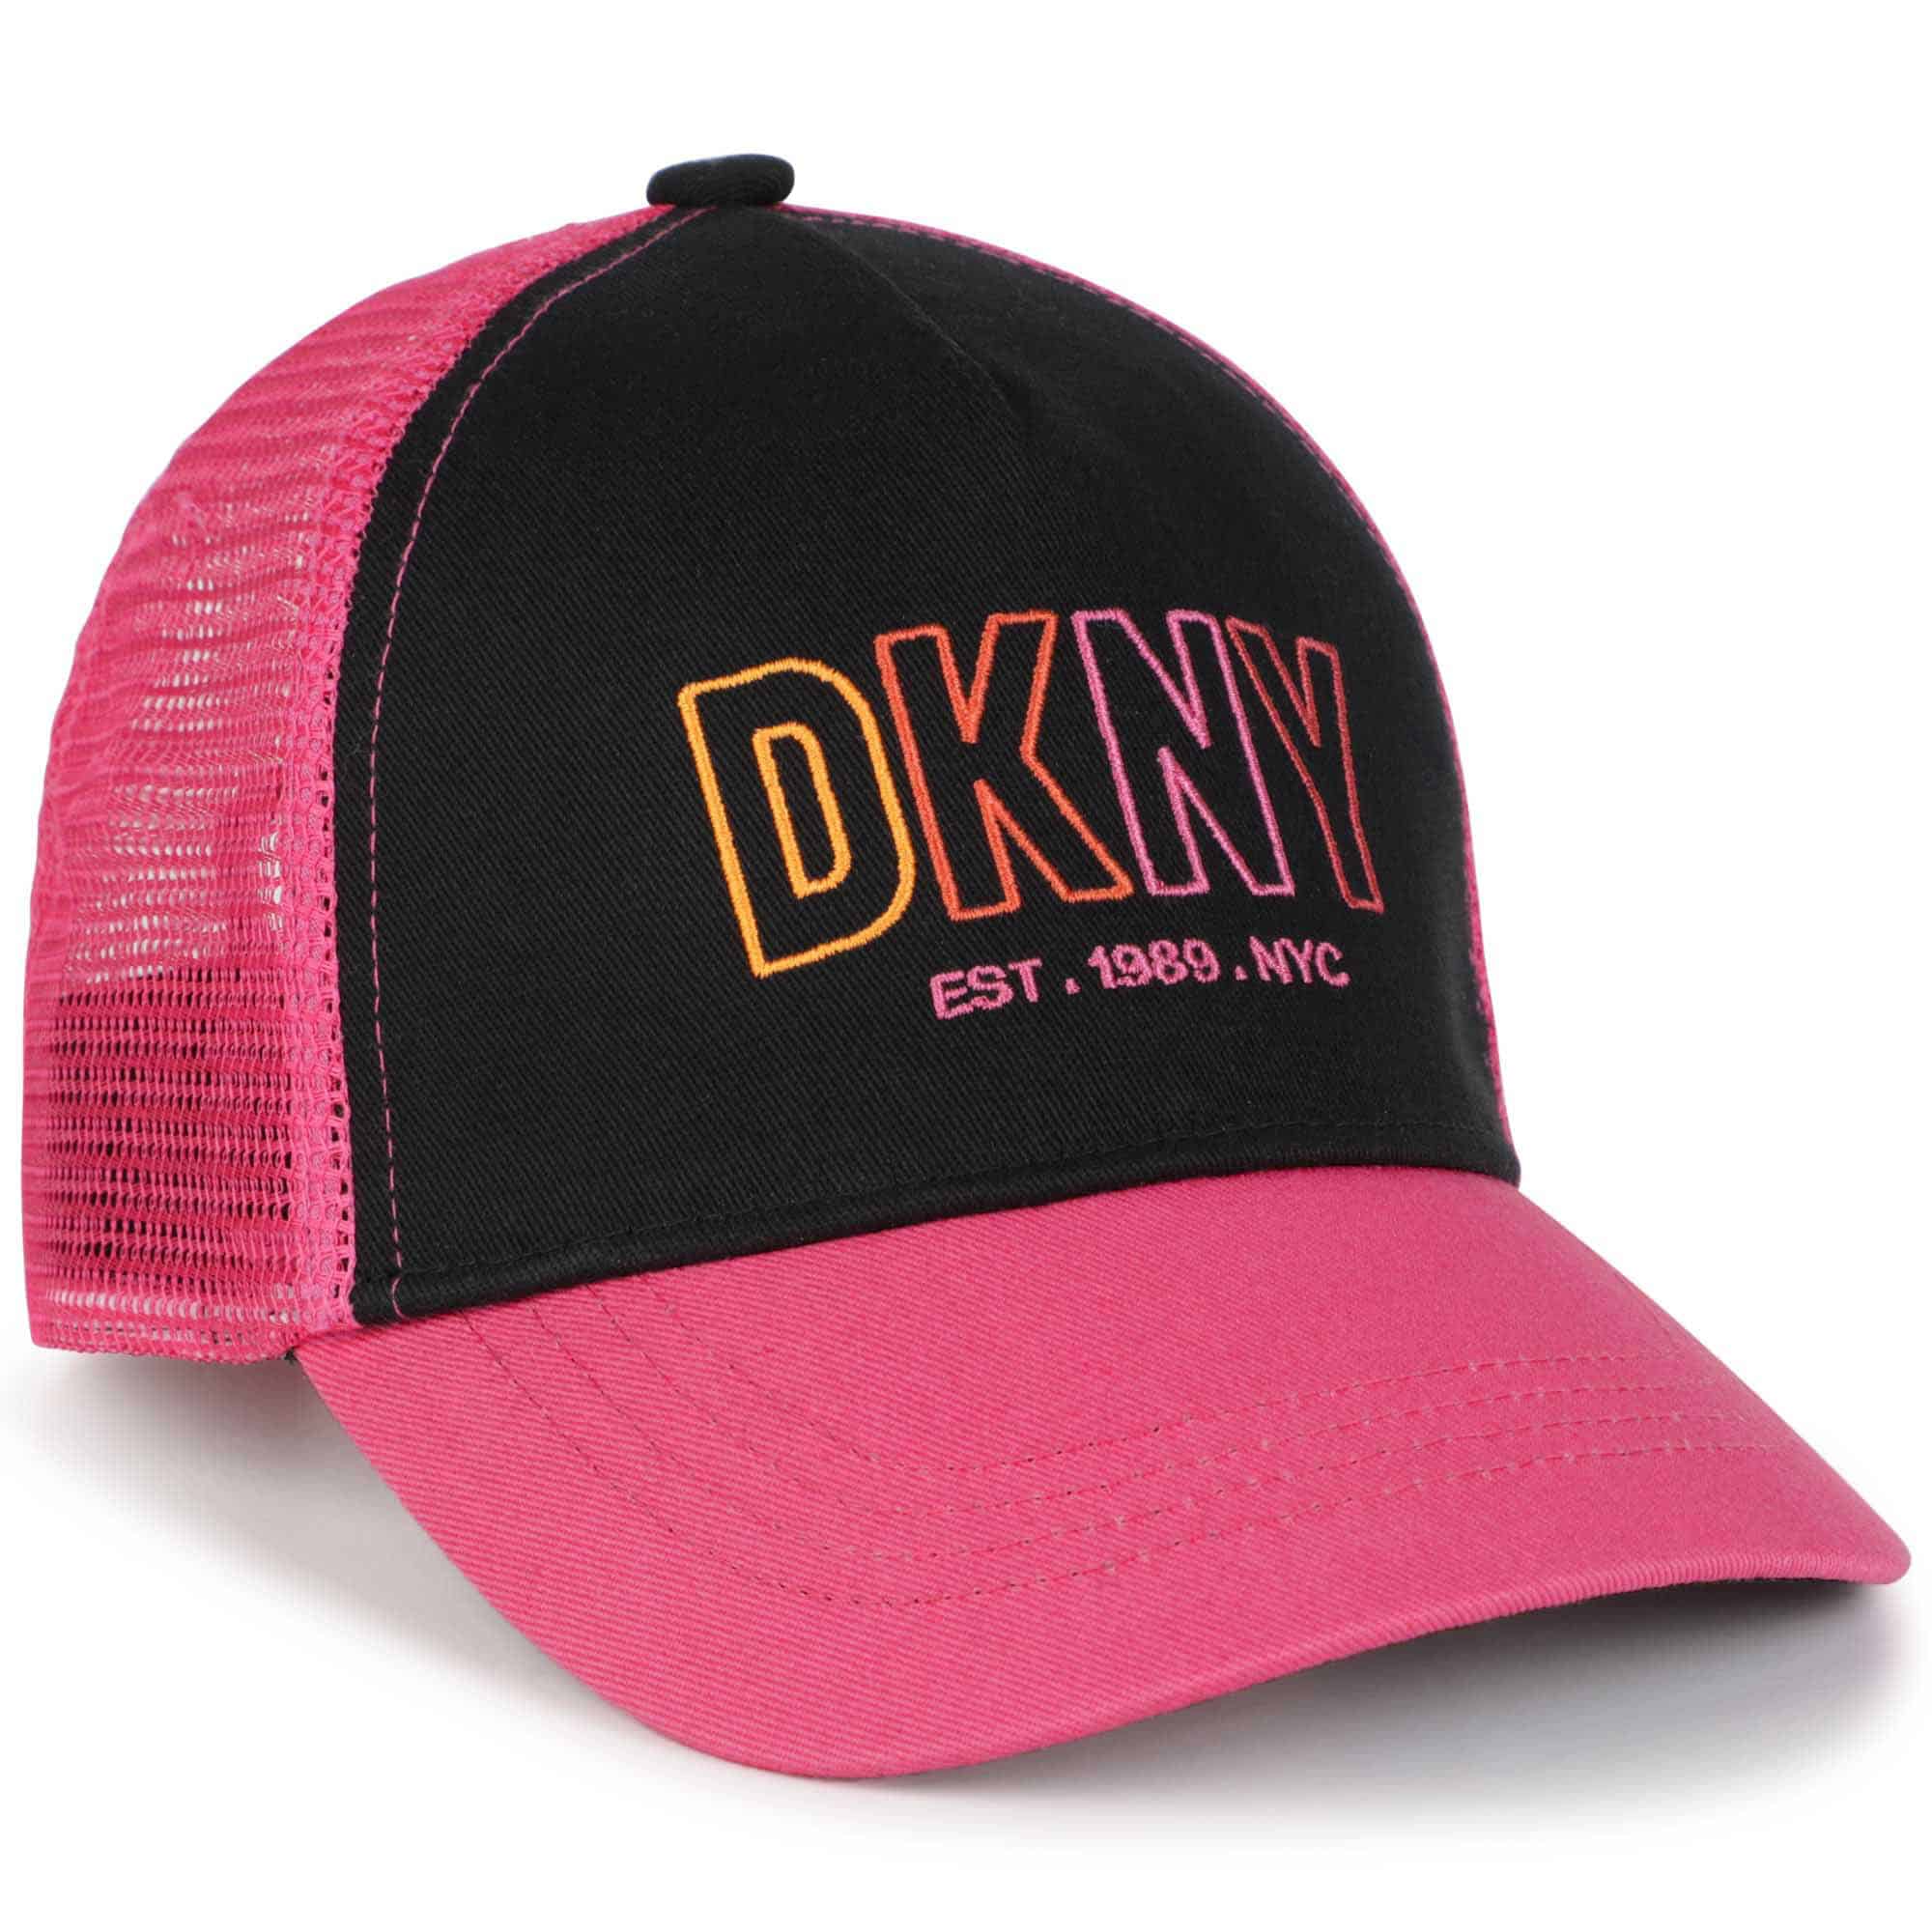 DKNY girls black and pink baseball cap